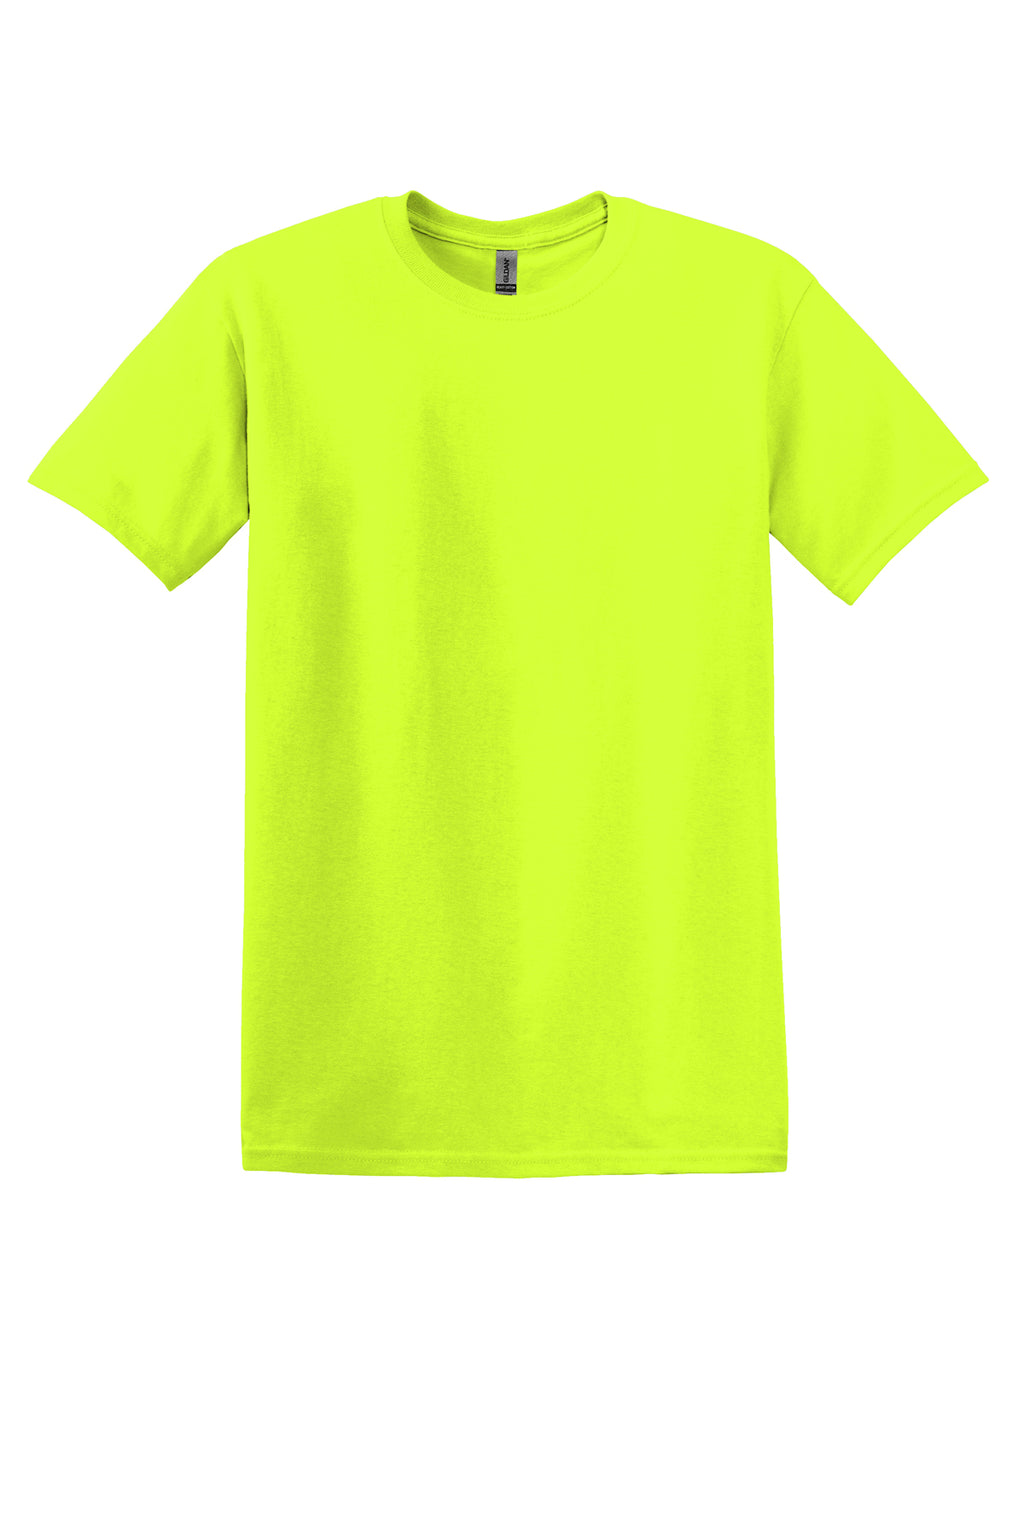 Gildan Mens/Unisex S/S Shirts Safety Green